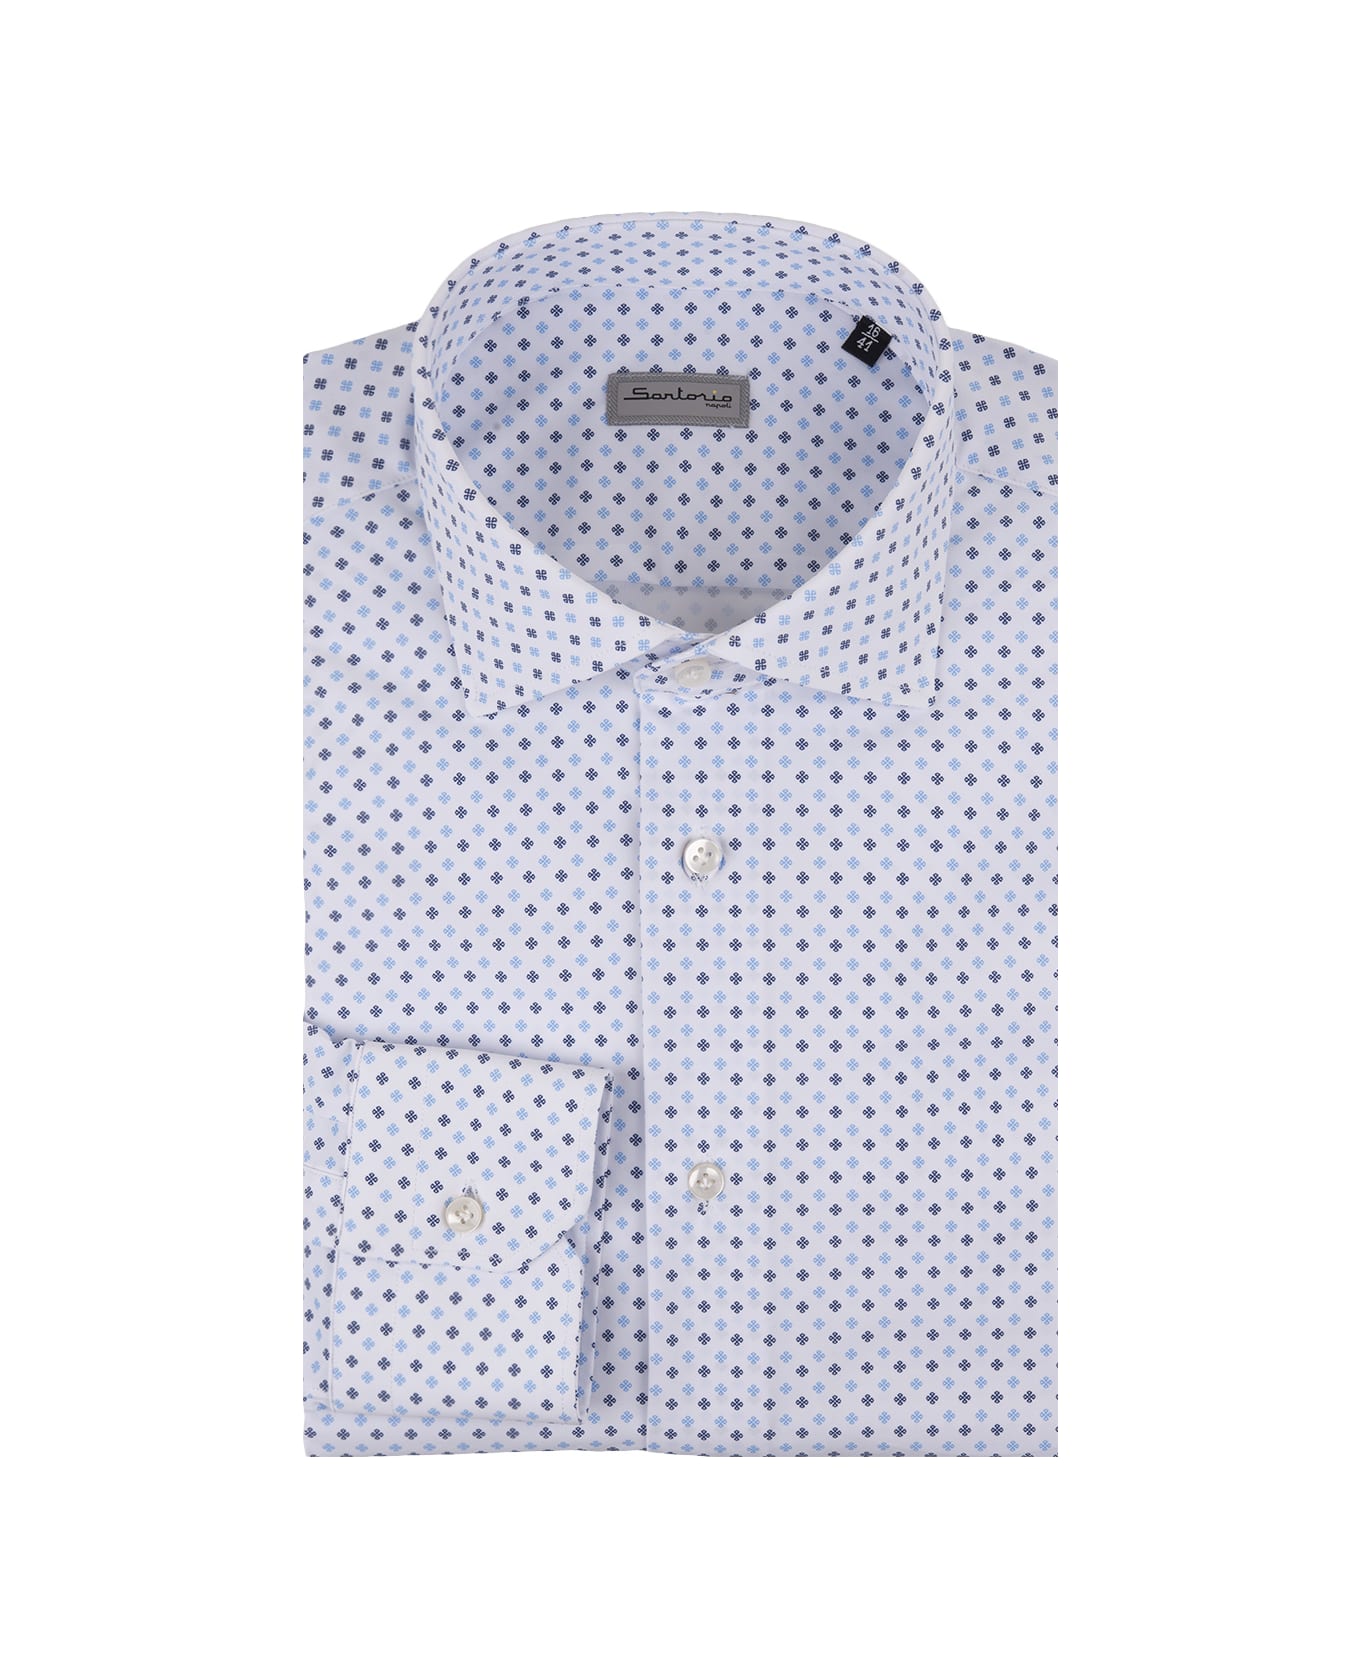 Sartorio Napoli White Shirt With Blue Micro Floral Pattern - Blue シャツ